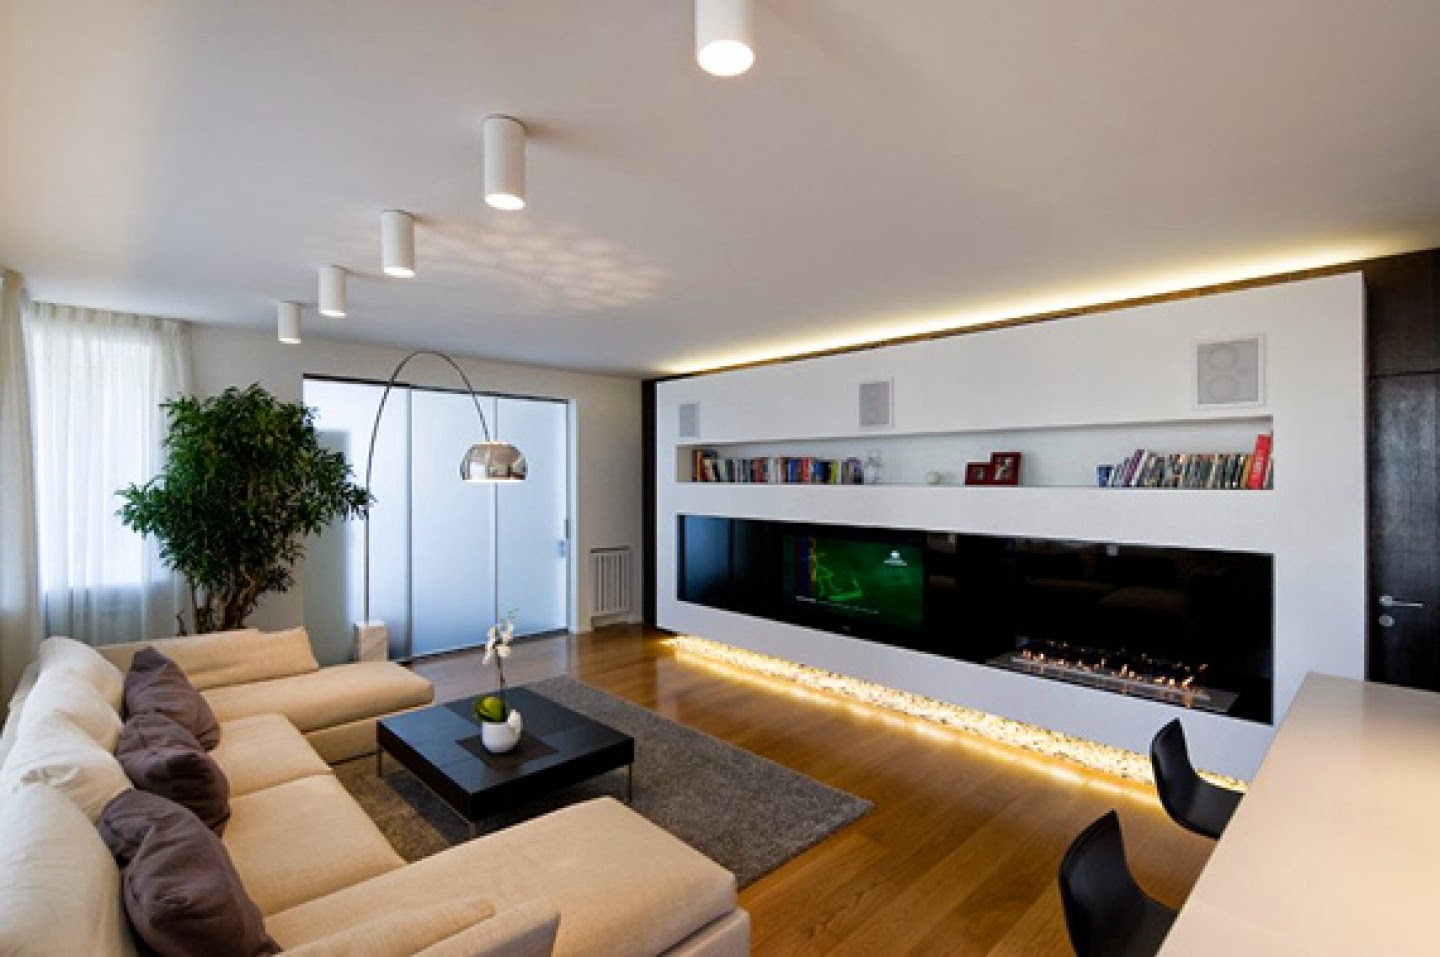 Best Living Room Decor Ideas